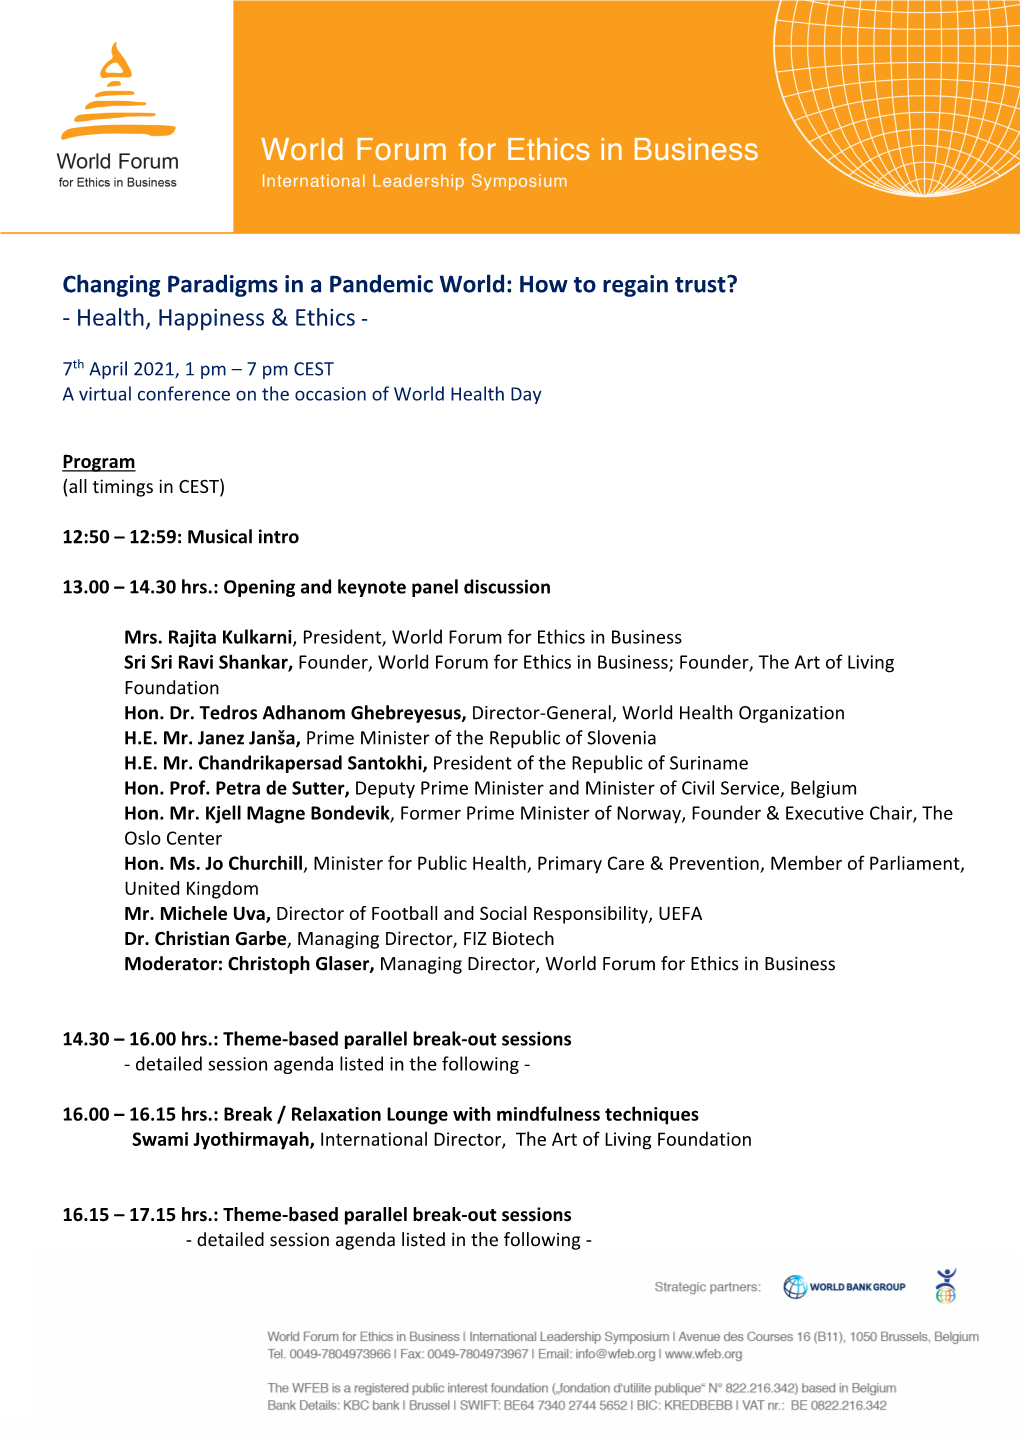 Program Changing Paradigms in a Pandemic World (Status0504